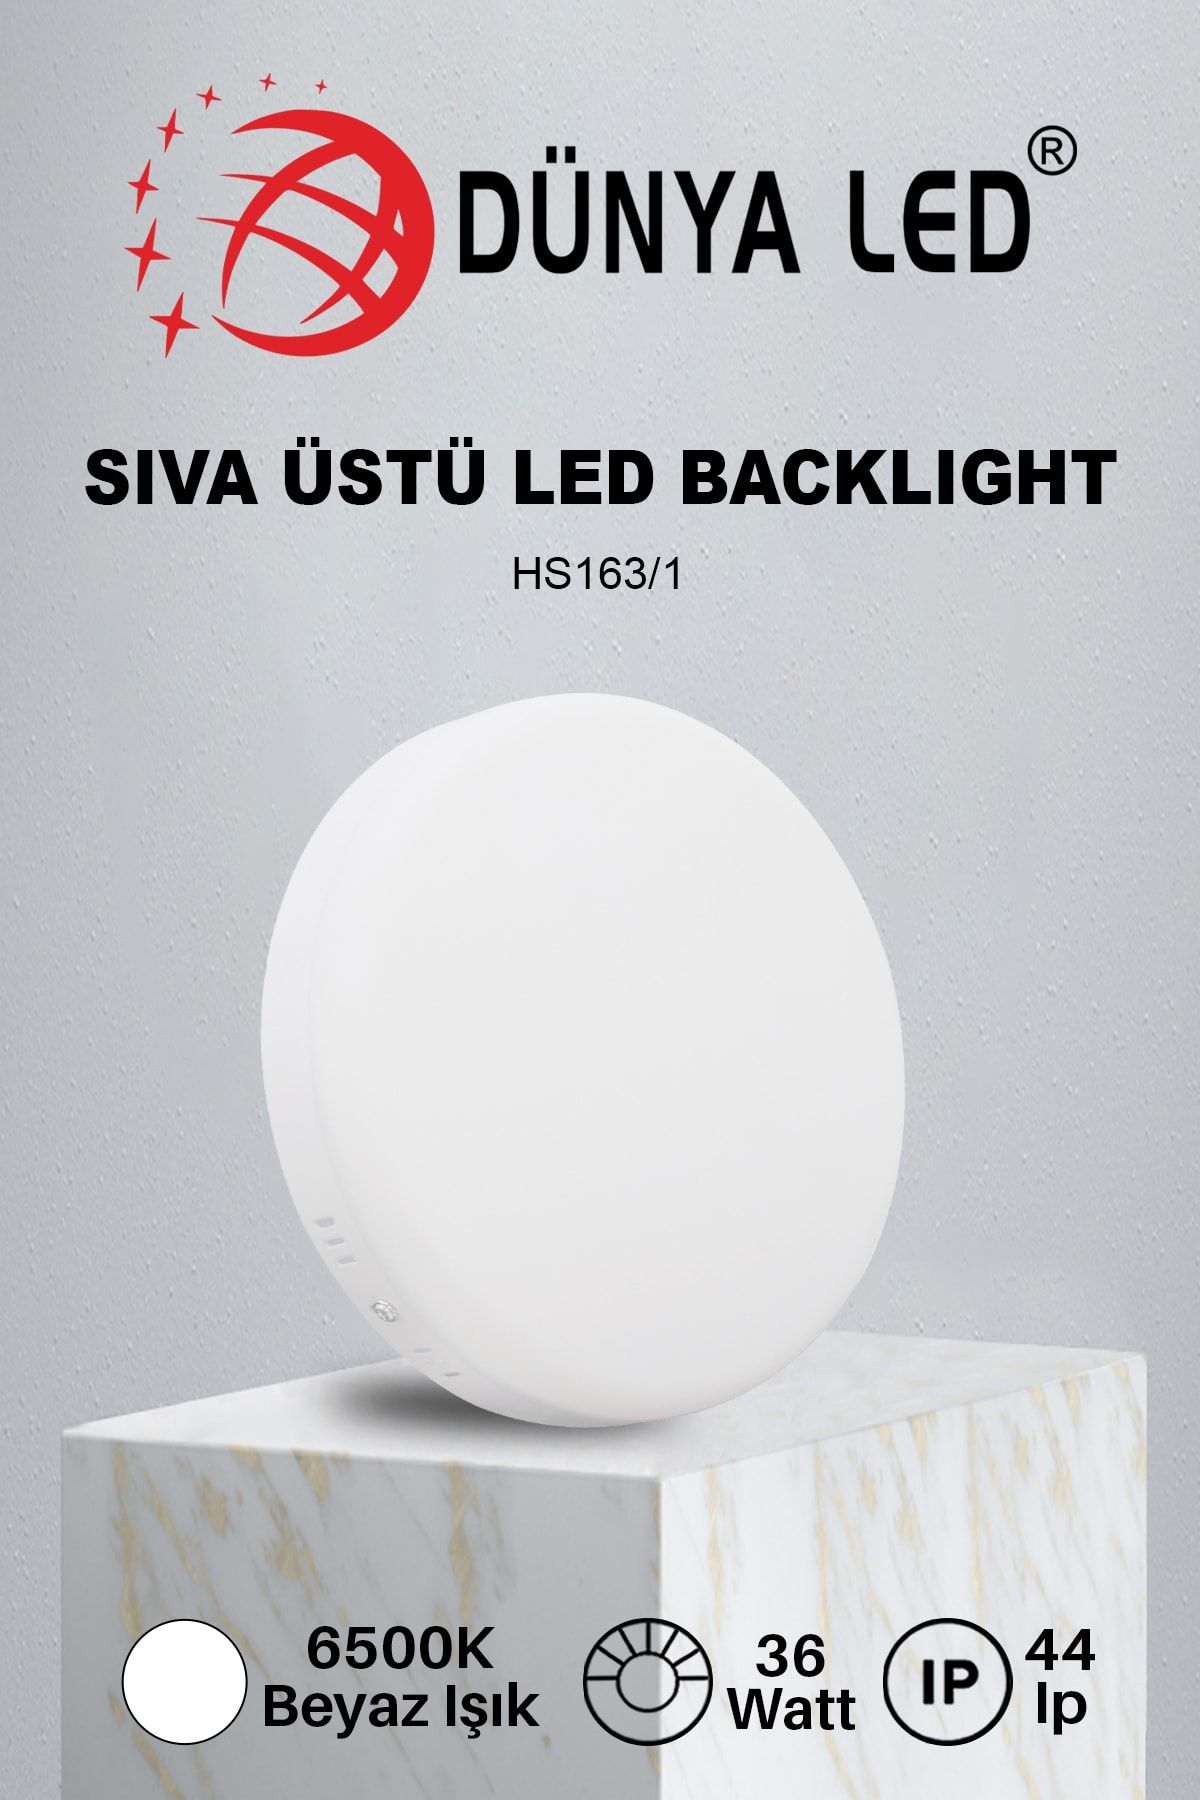 DÜNYA LED Hs.163/1 36w Sıva Üstü Yuvarlak Led Backlıght 6500k Beyaz Işık Drıver